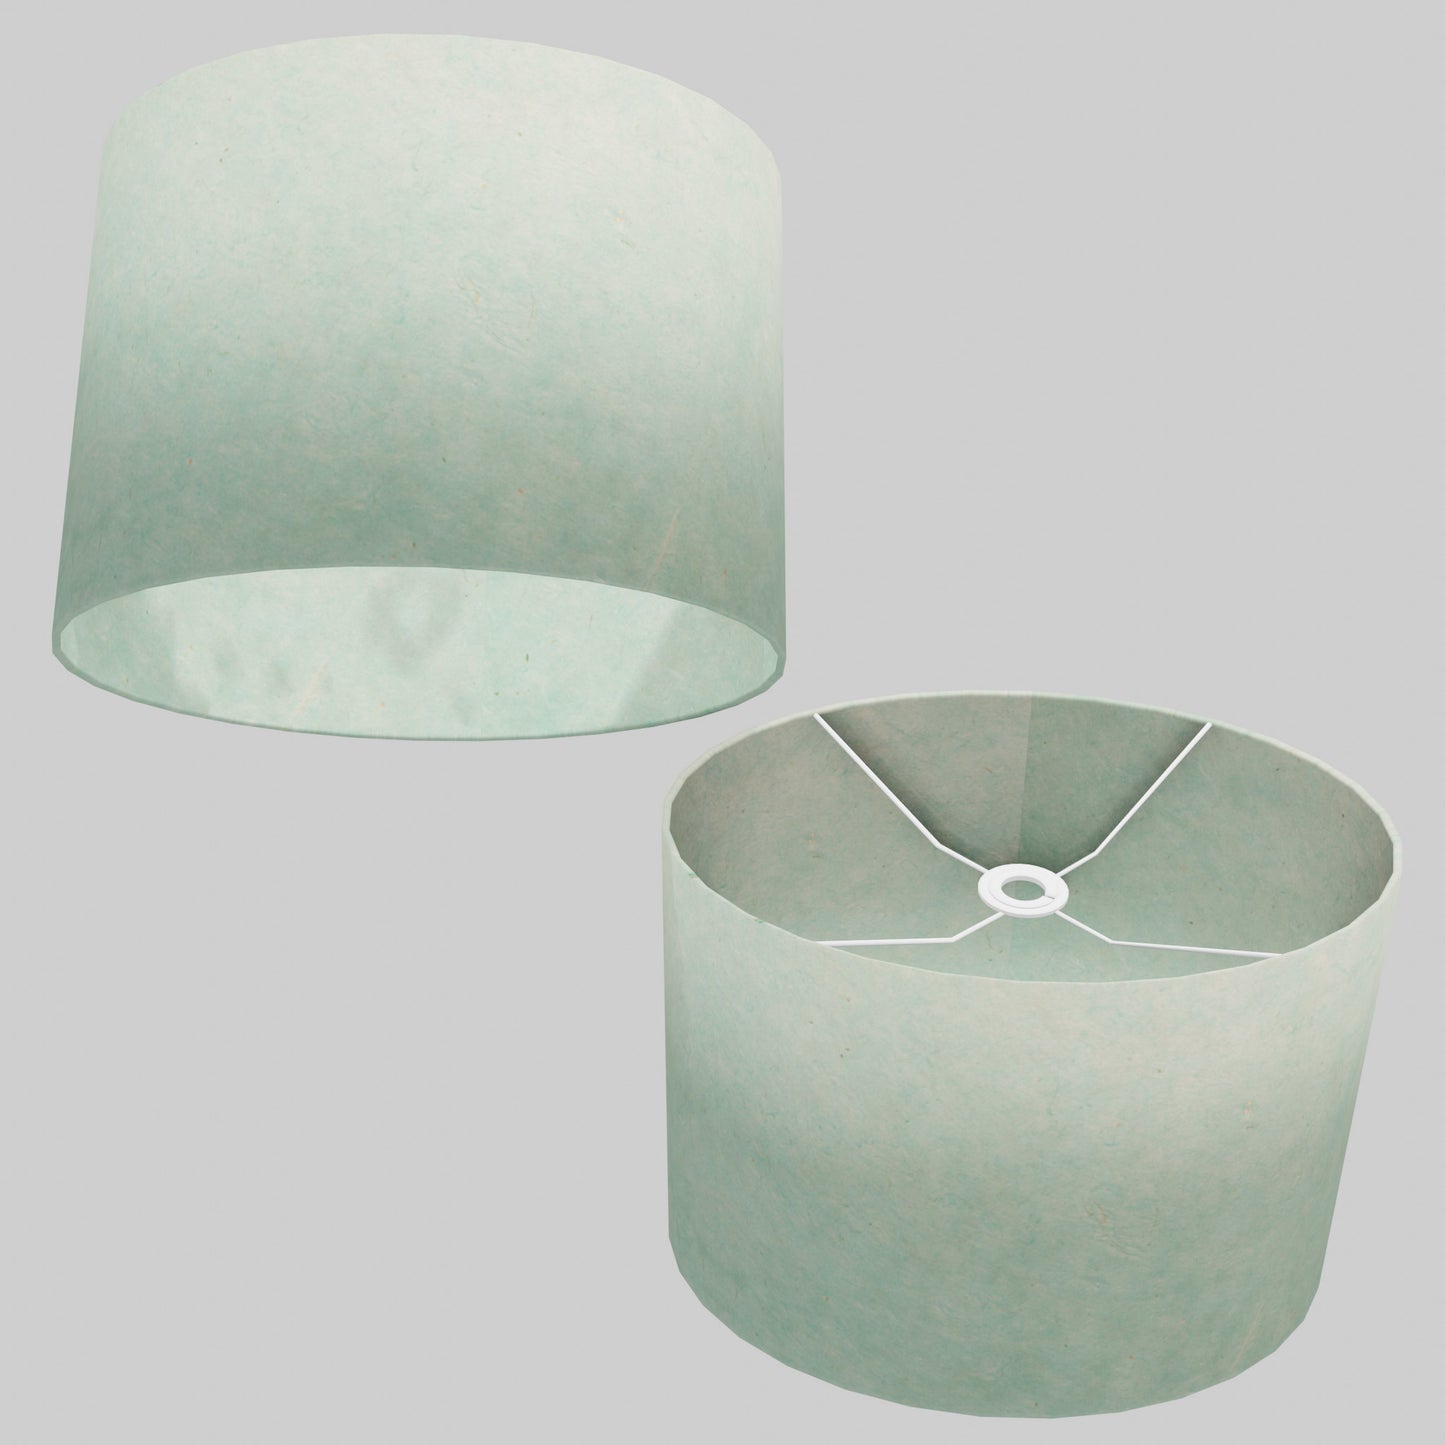 Oval Lamp Shade - P65 - Turquoise Lokta, 40cm(w) x 30cm(h) x 30cm(d)